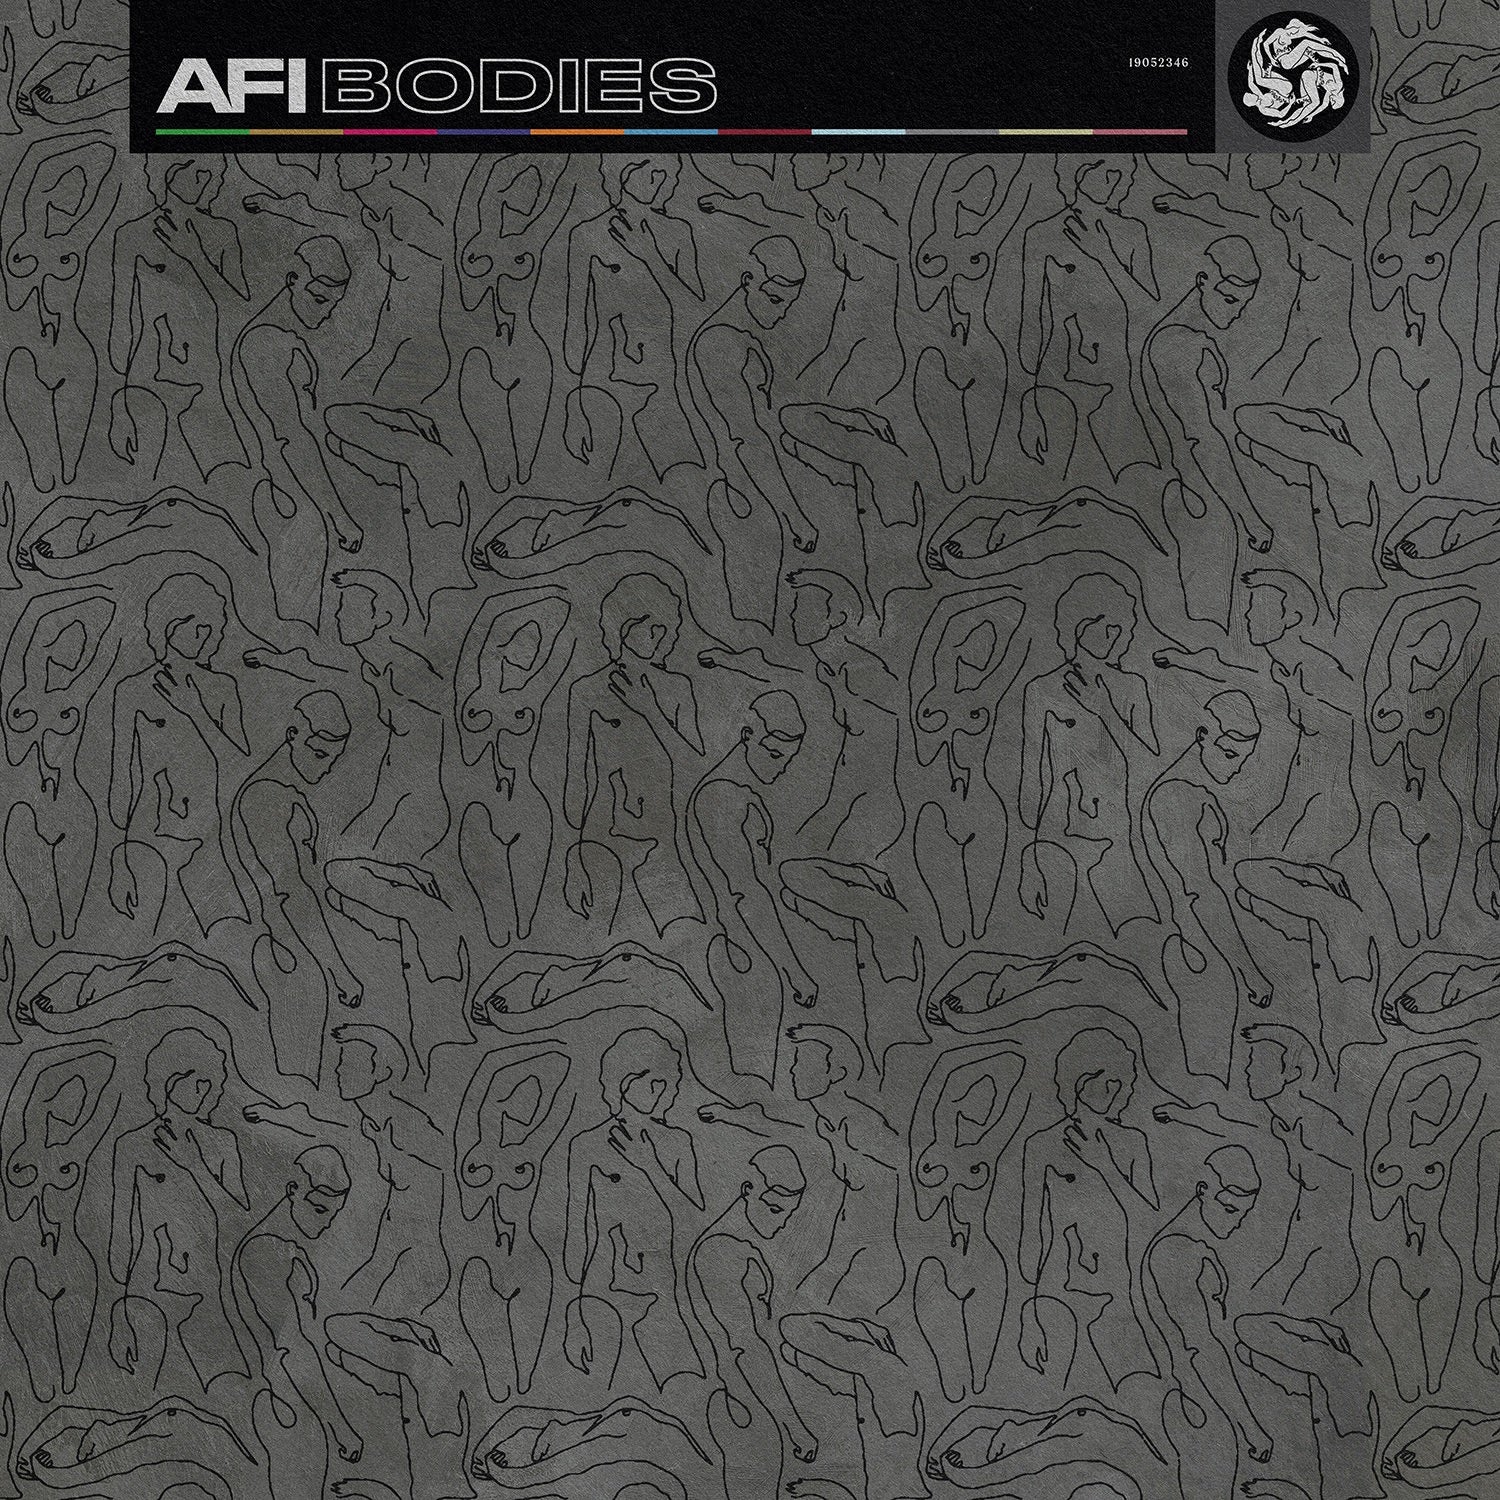 AFI - Bodies - CD